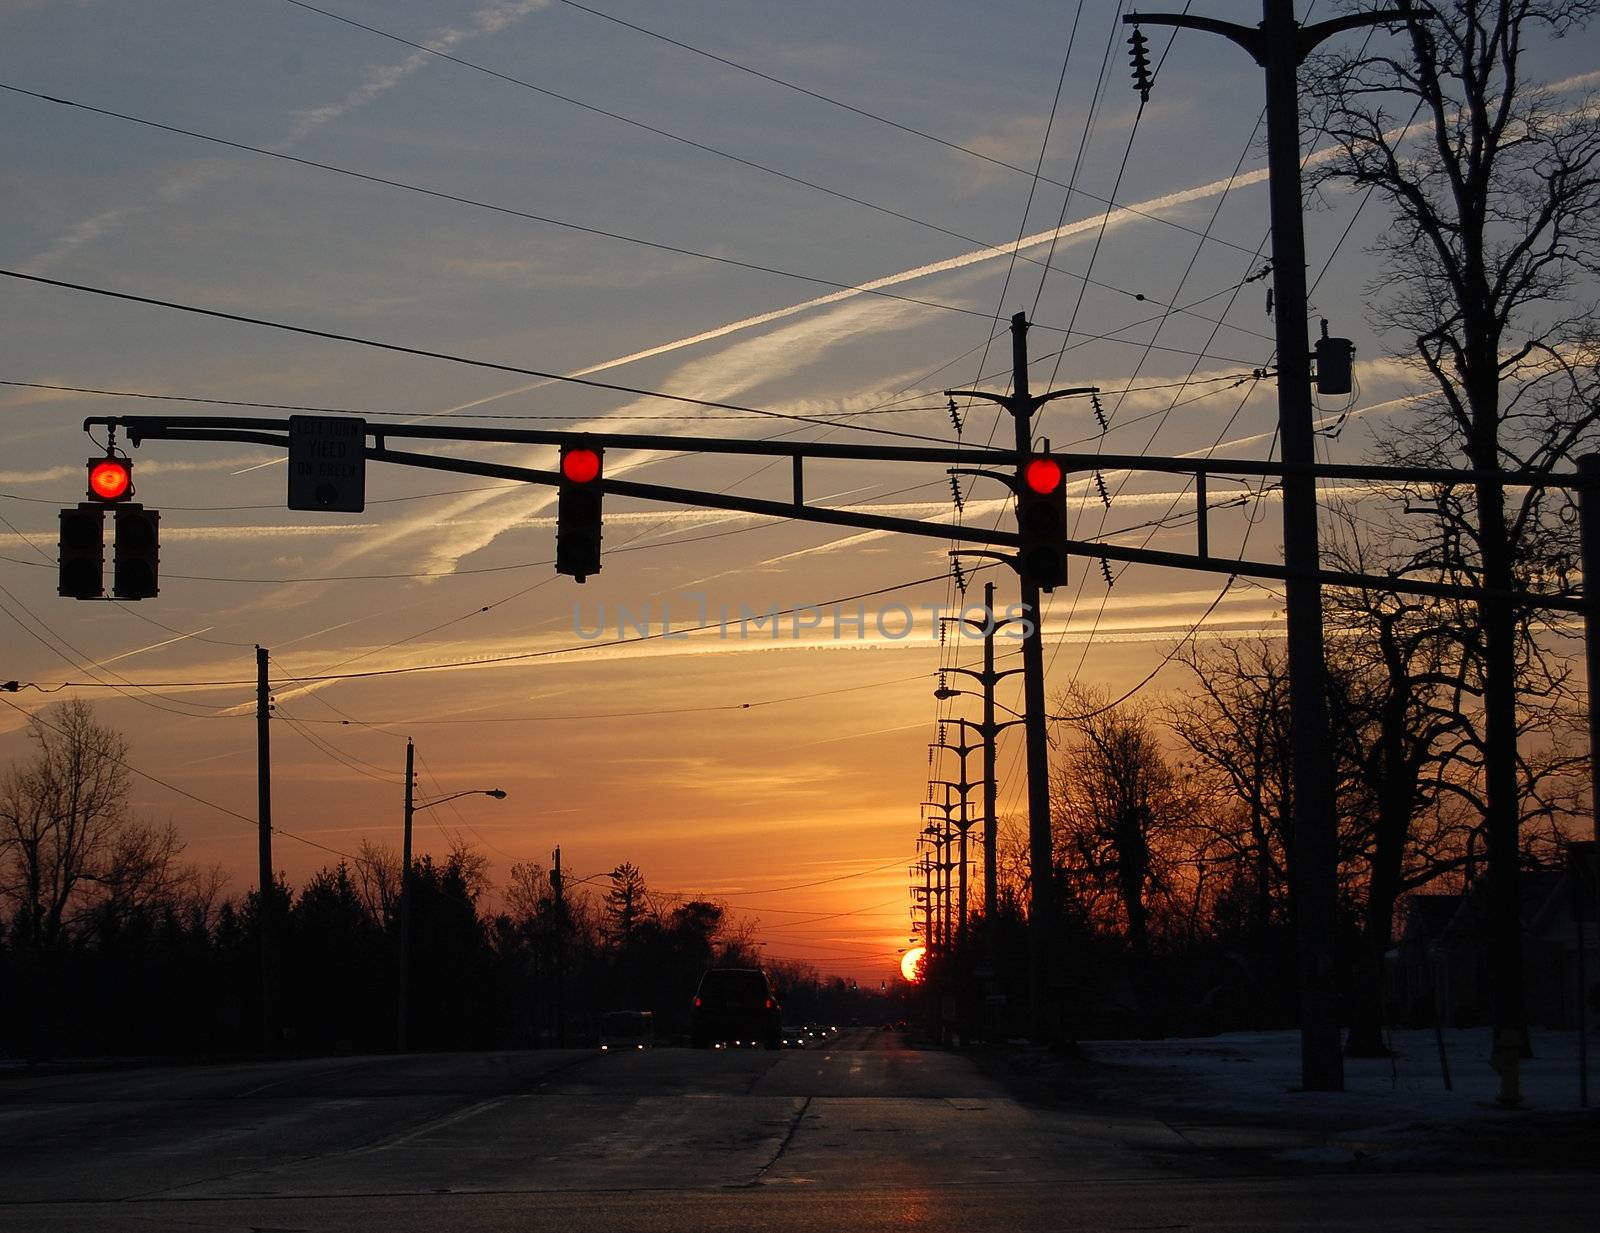 Streetlight Sunset by RefocusPhoto